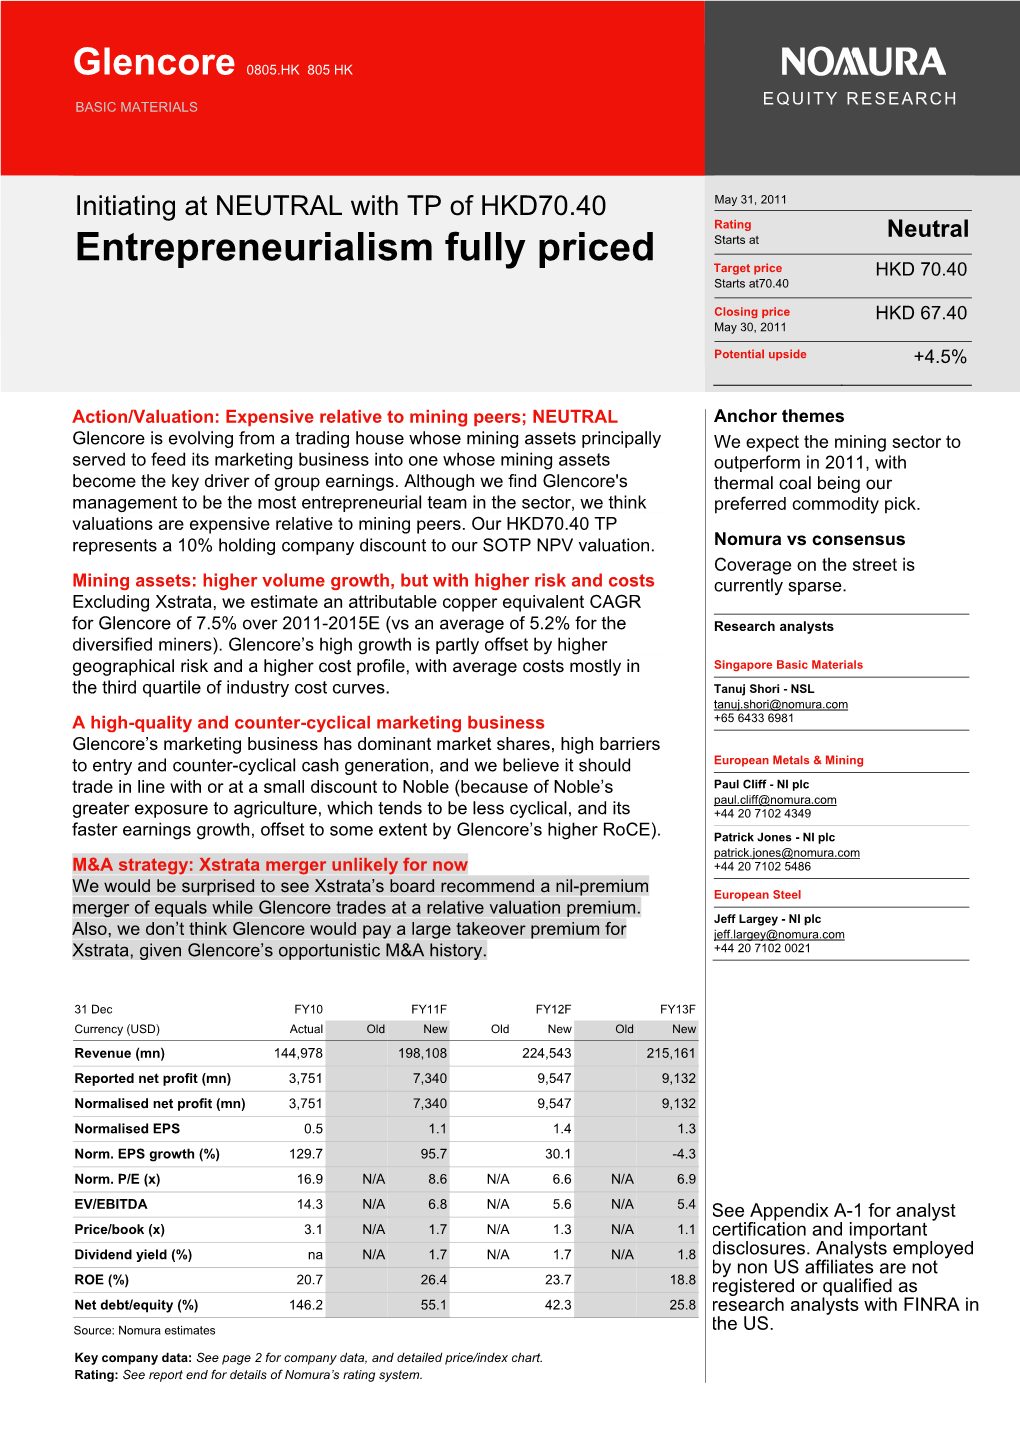 Entrepreneurialism Fully Priced Target Price HKD 70.40 Starts At70.40 Closing Price HKD 67.40 May 30, 2011 Potential Upside +4.5%